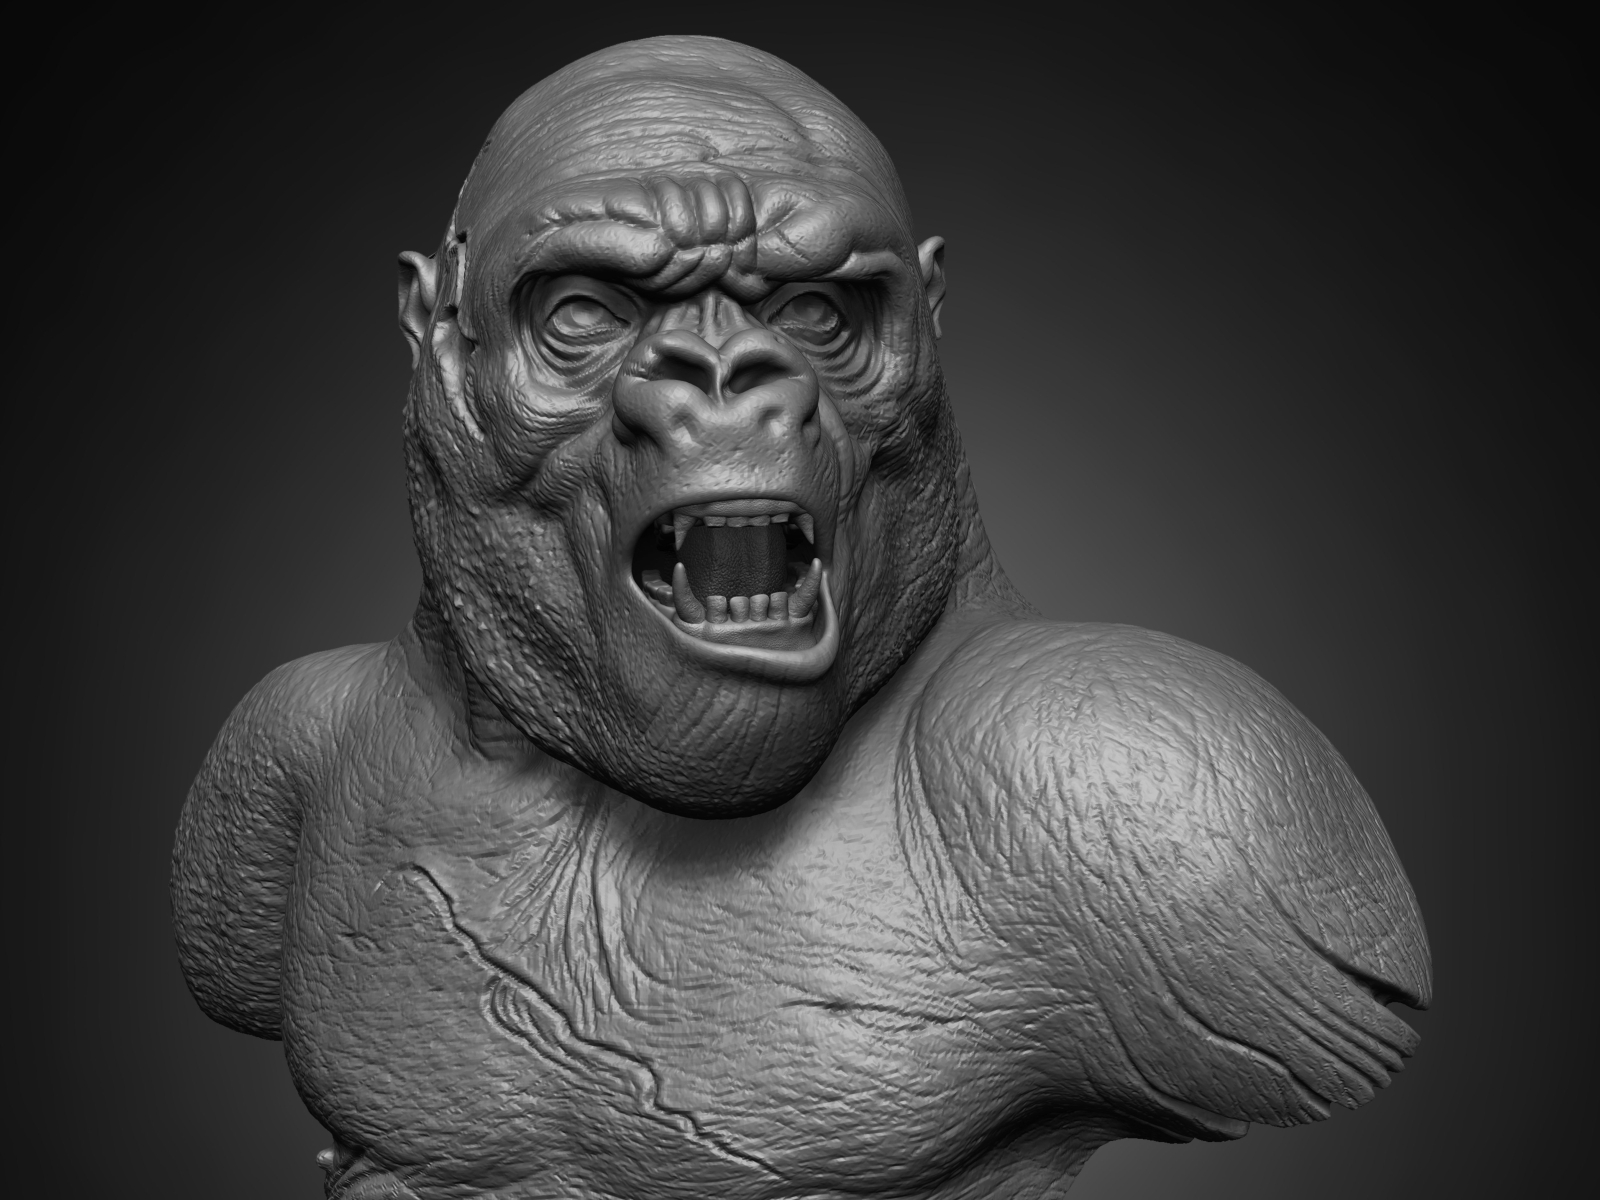 Killer Gorilla Predator by Yacine BRINIS on Dribbble